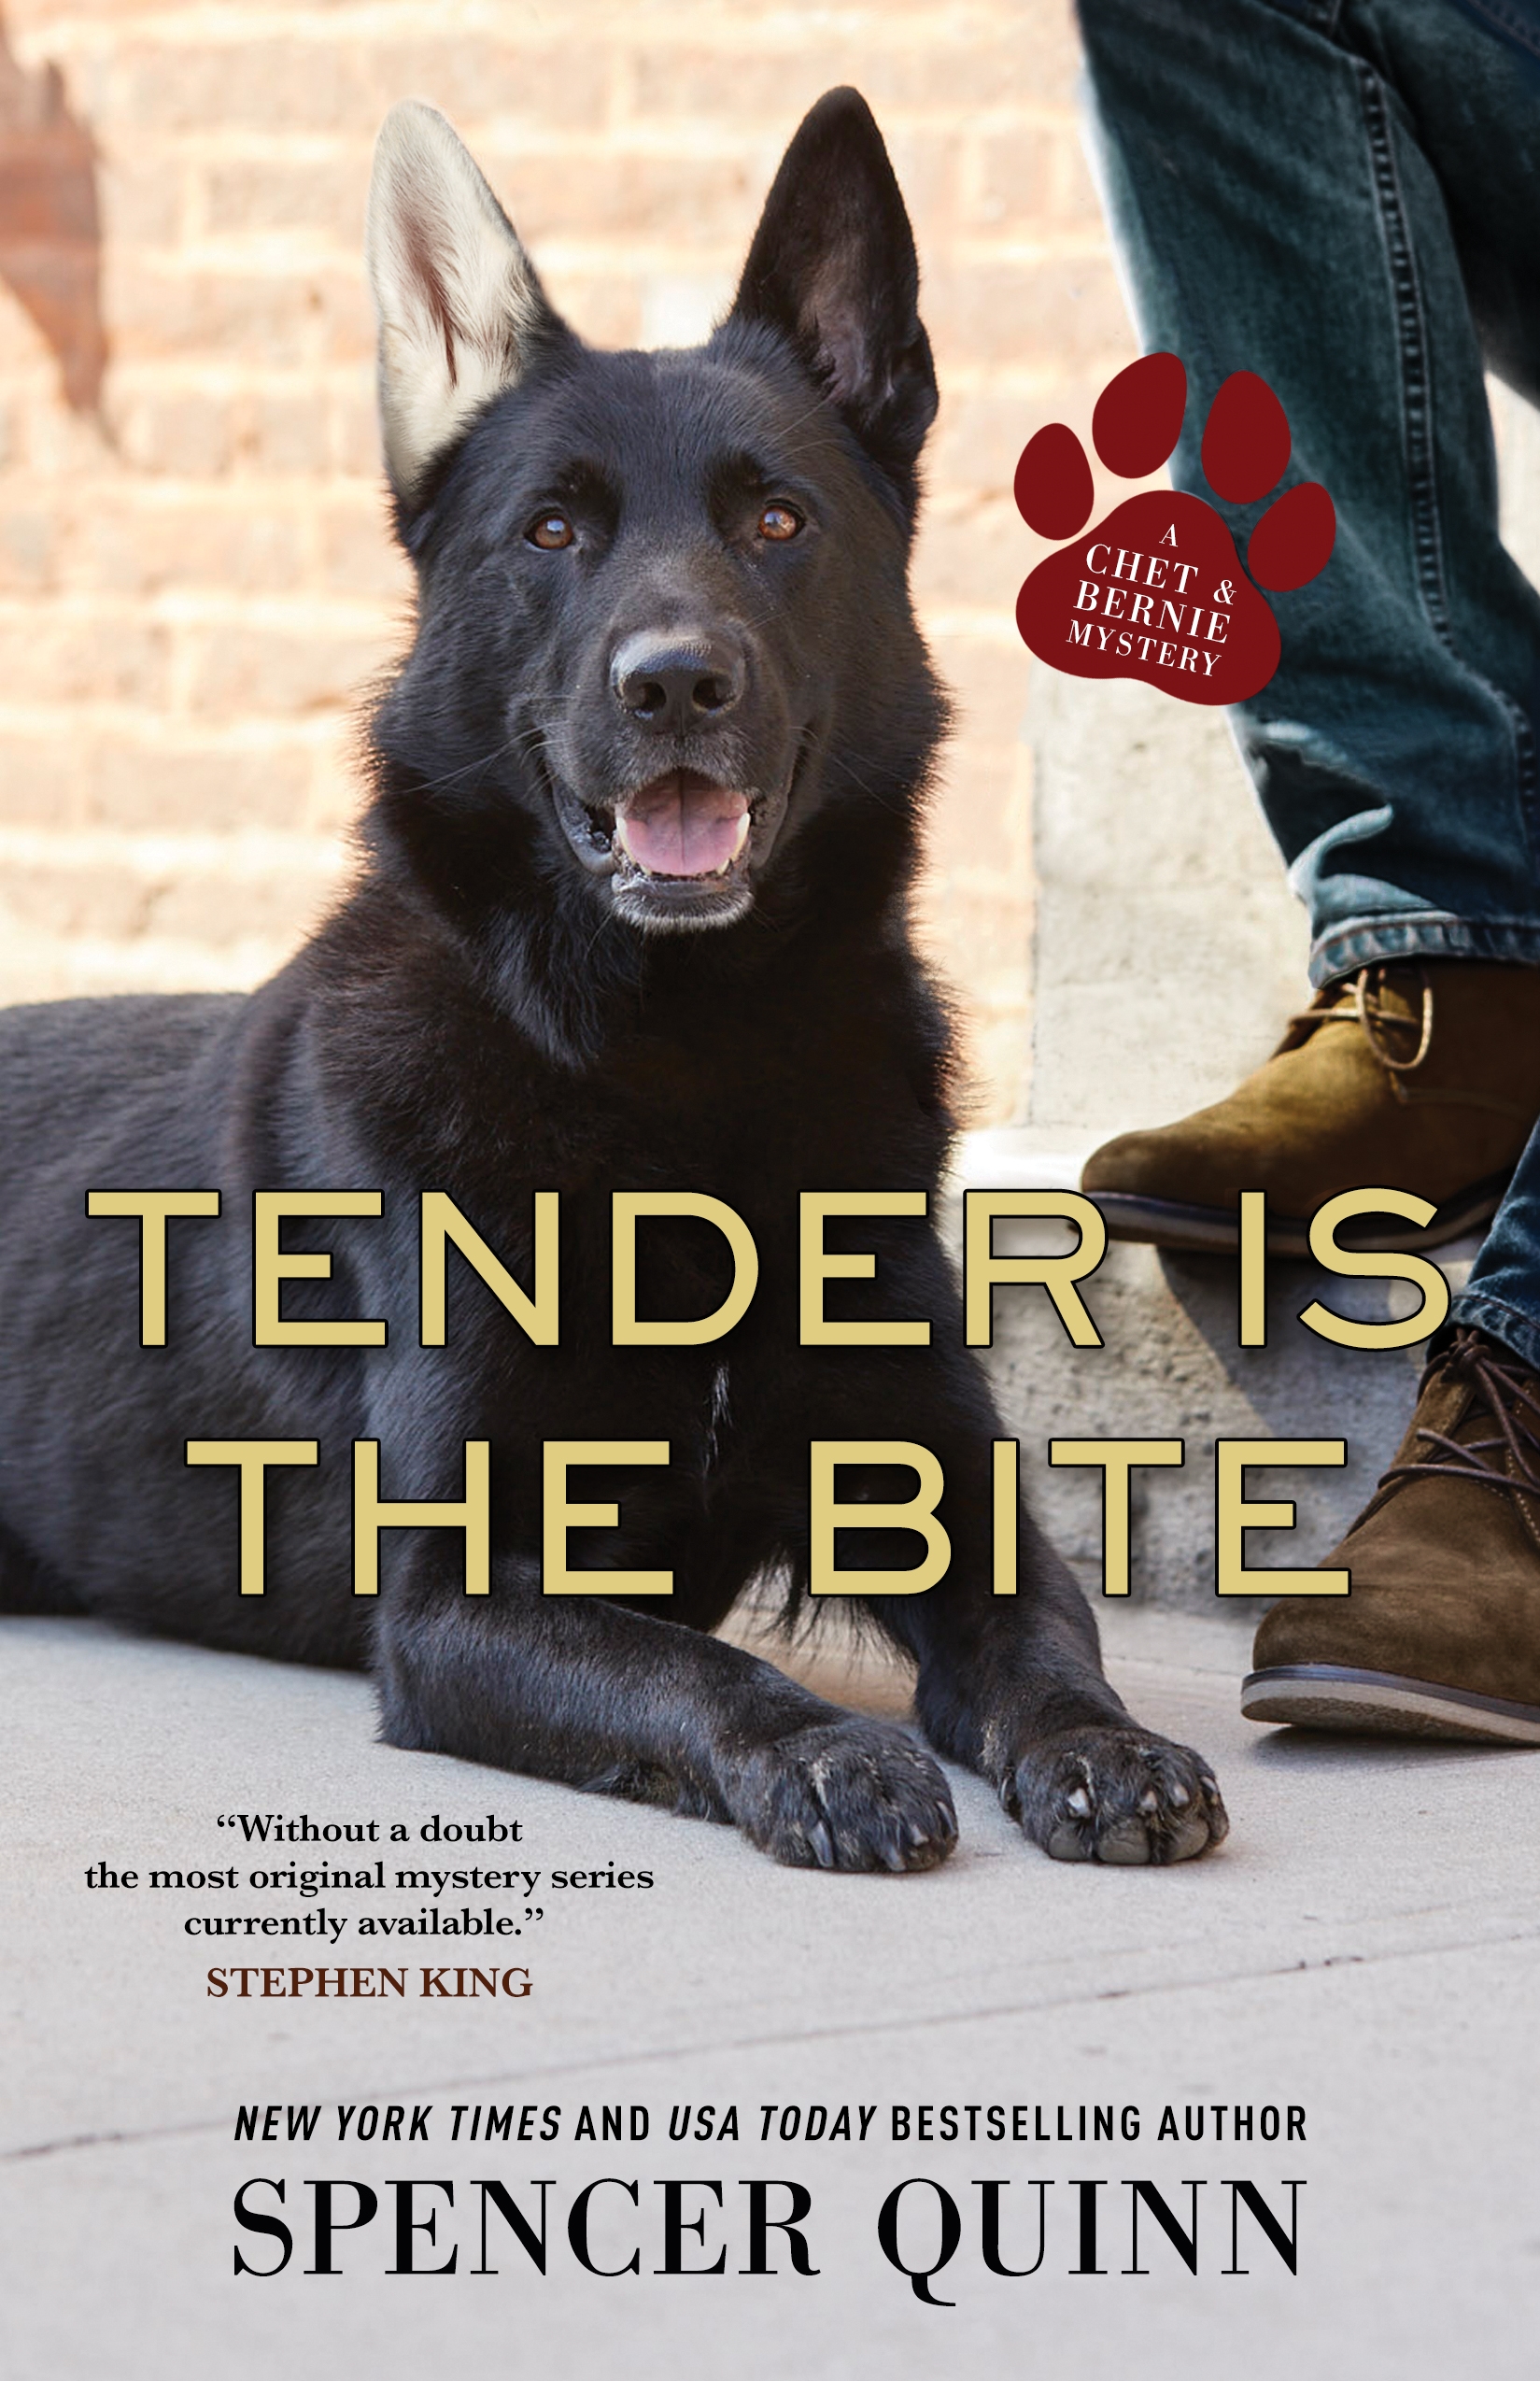 Tender Is the Bite : A Chet & Bernie Mystery by Spencer Quinn